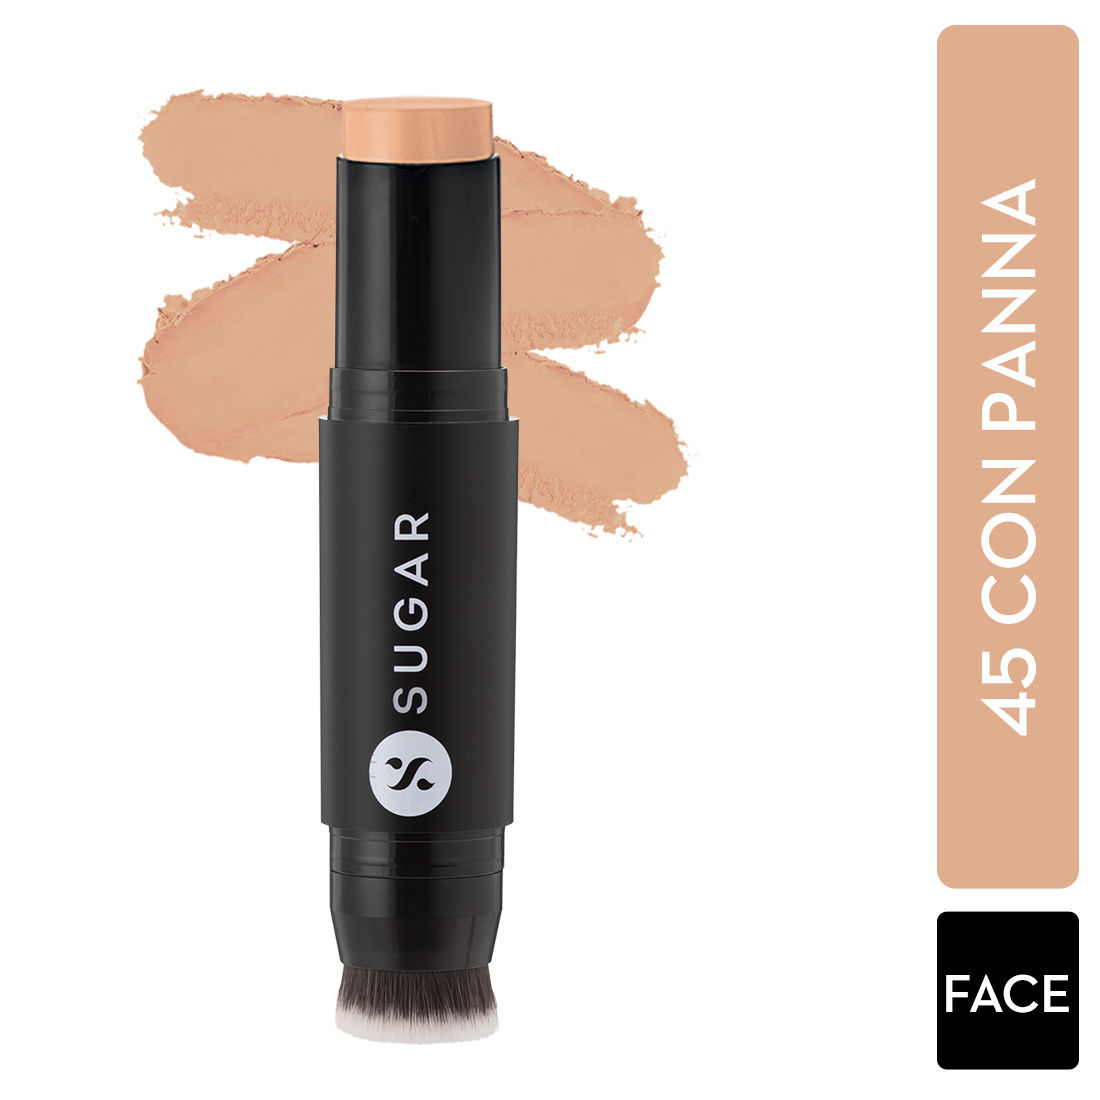 Buy Ace Of Face Foundation Stick - 45 Con Panna (Medium Beige, Golden Undertone) - Purplle